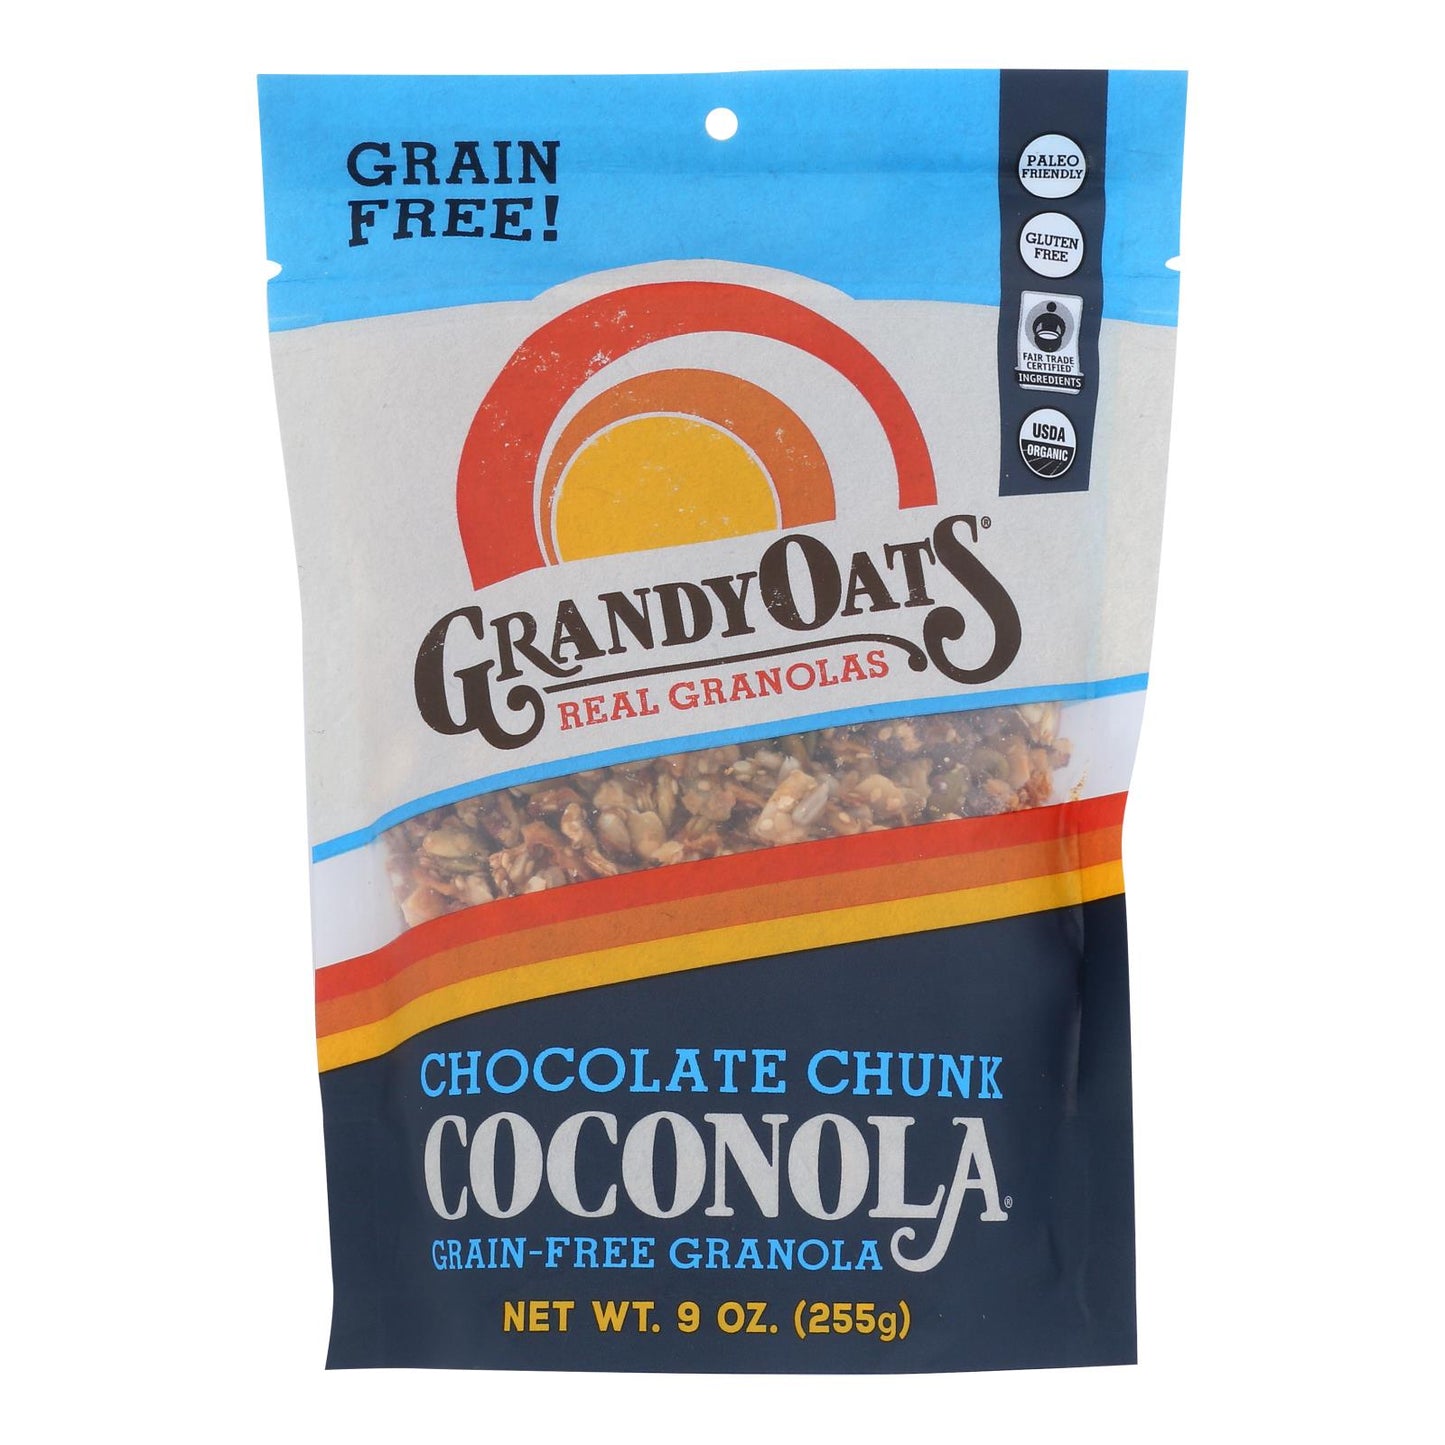 Grandy Oats Organic Granola - Chocolate Chunk Coconola - Case Of 6 - 9 Oz